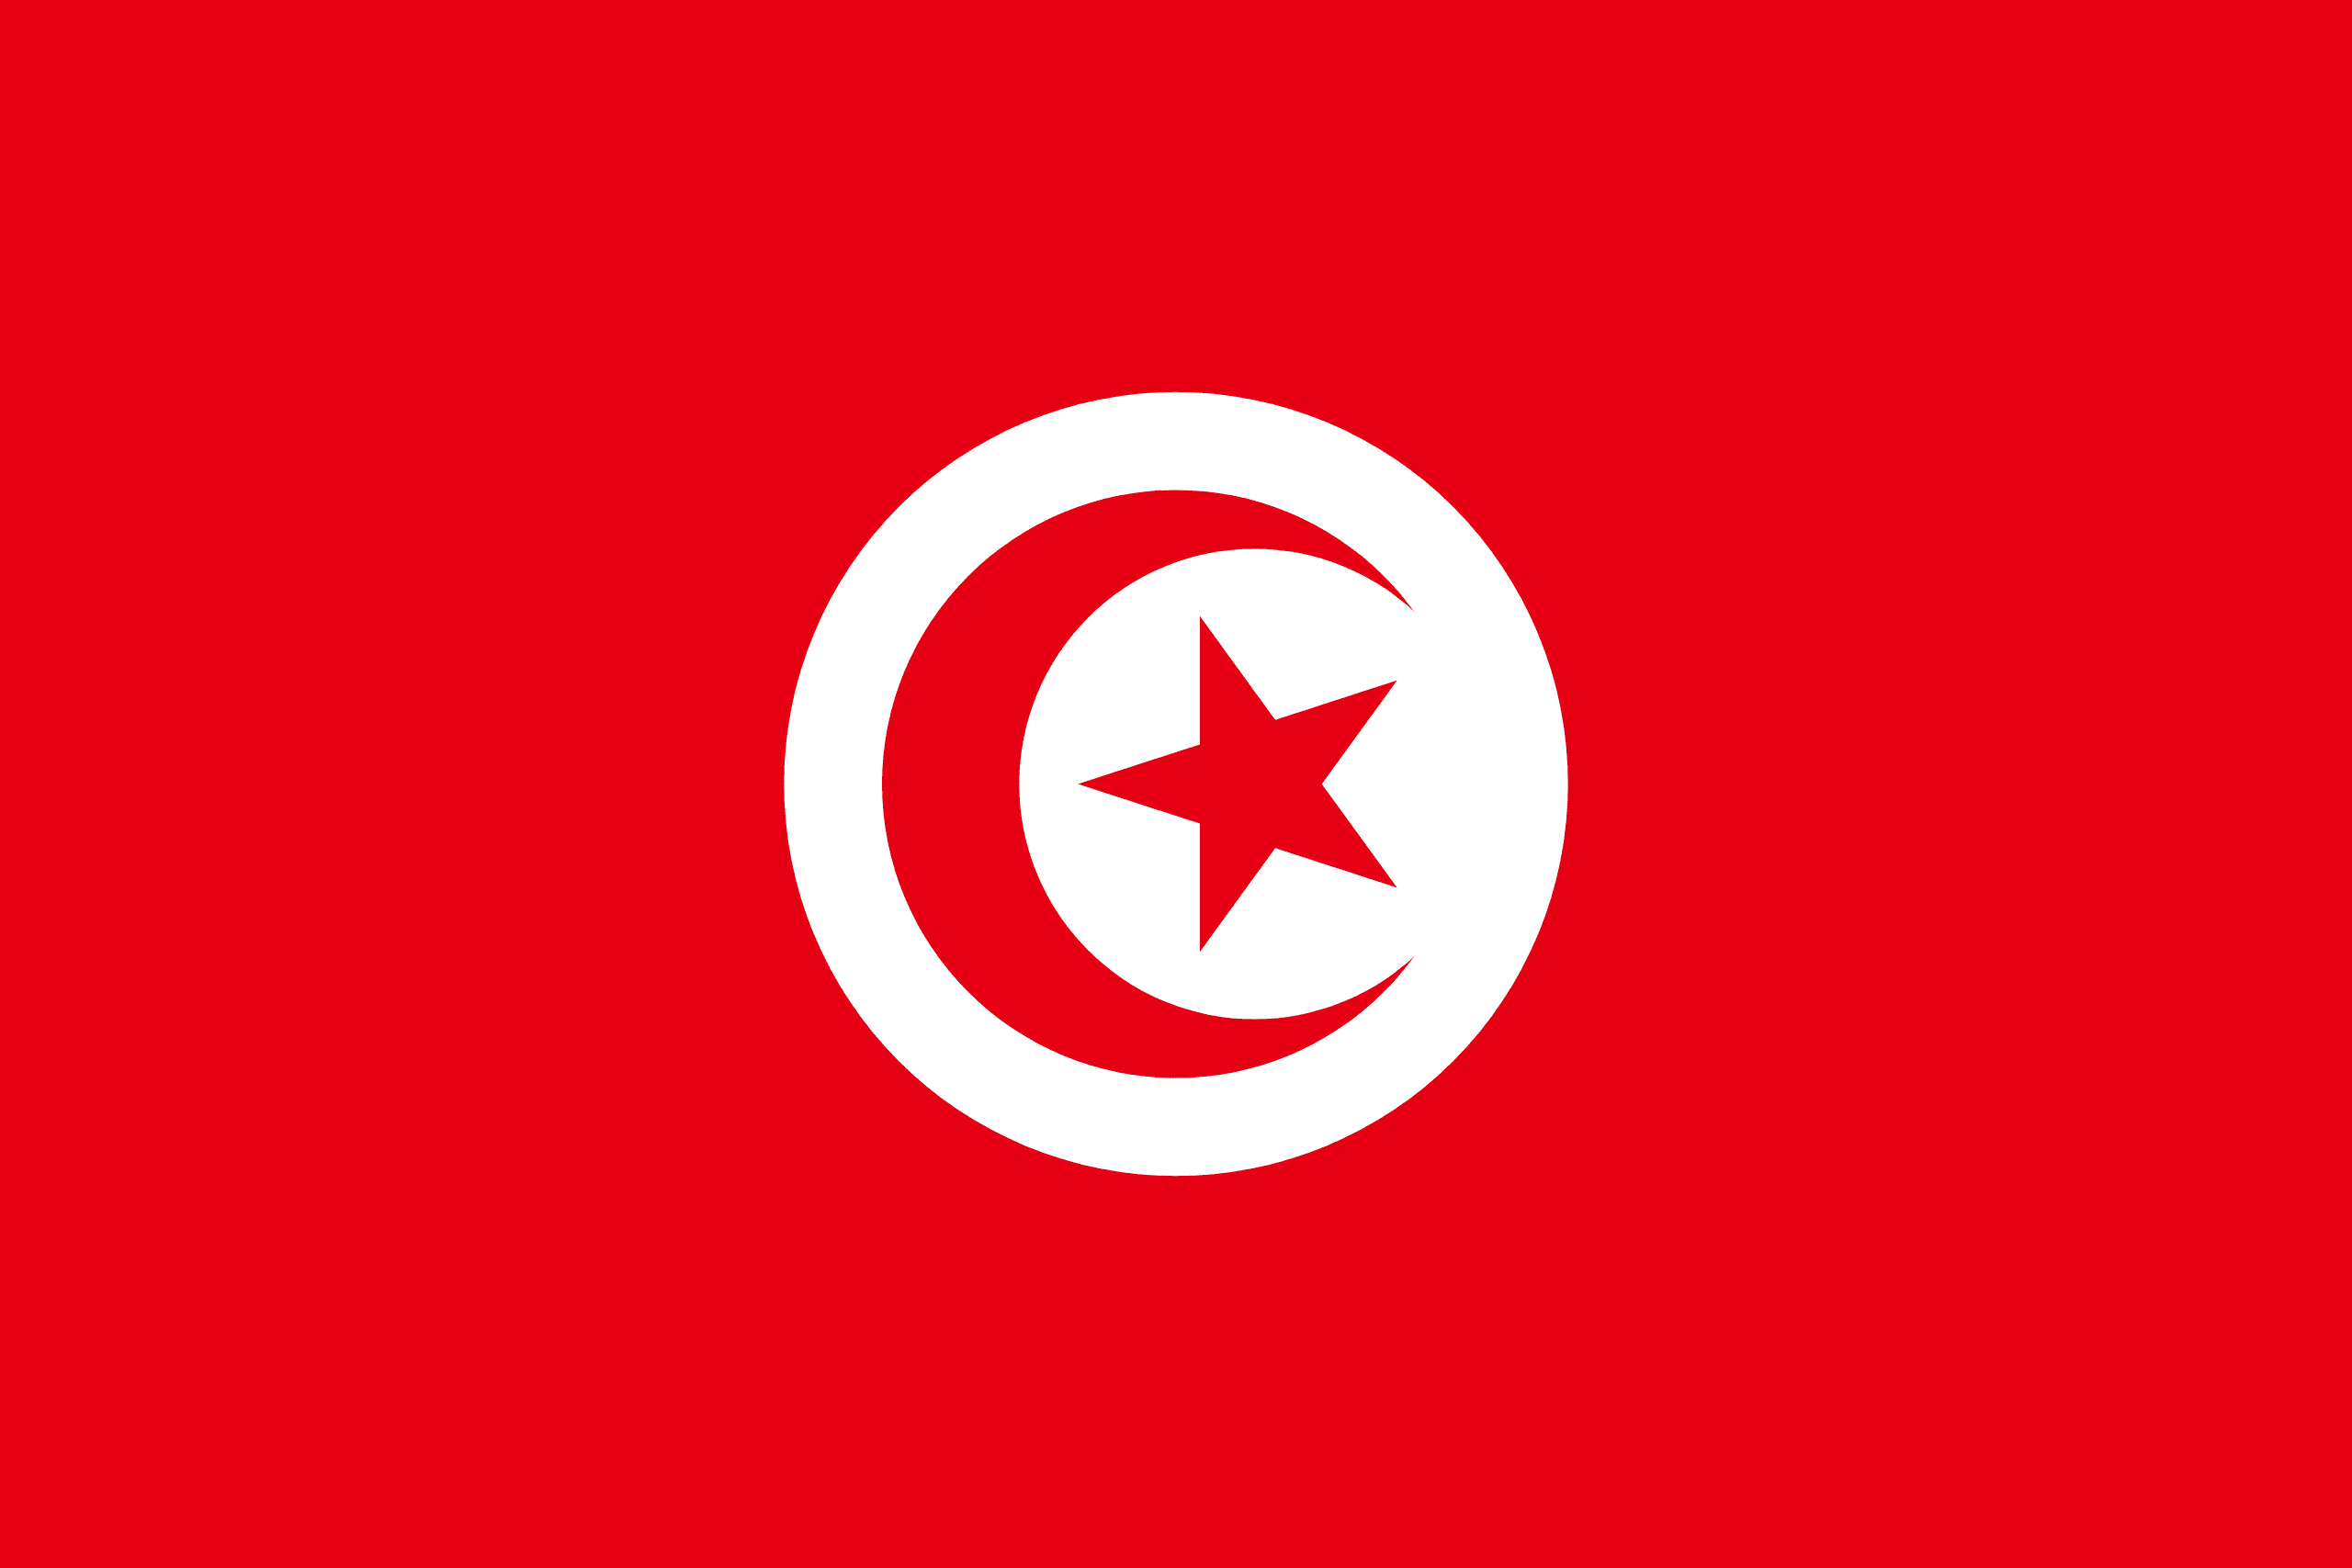 ۵Rades, Tunisia ״˹,ͻ˹